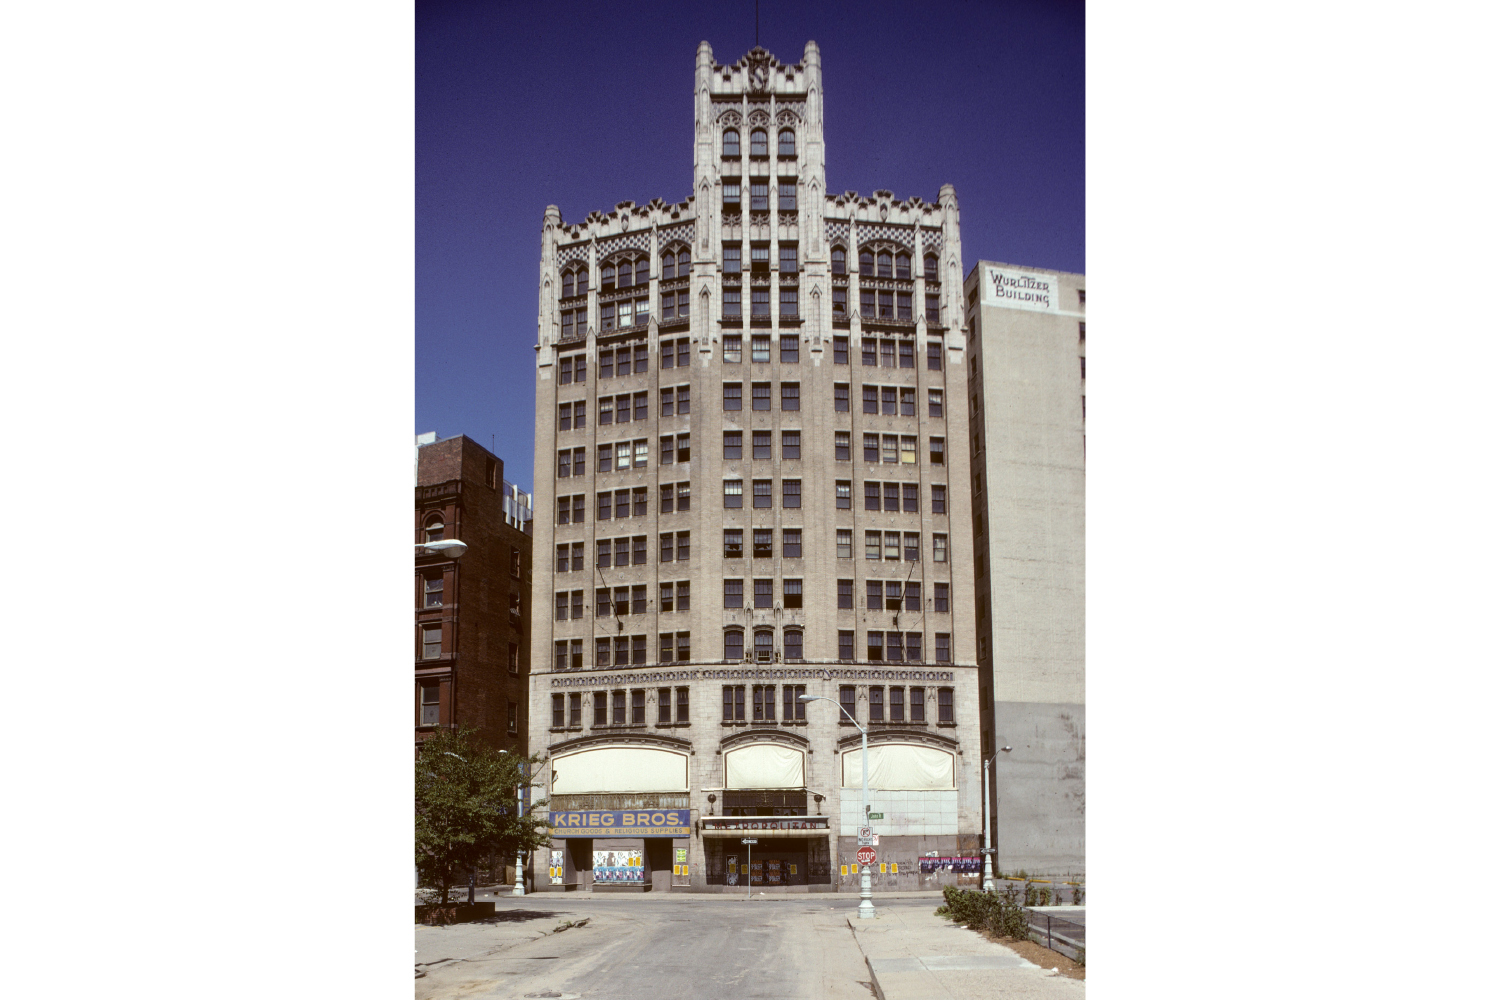 Former Metropolitan Building, Farmer at John R. Sts., Detroit, 1991.